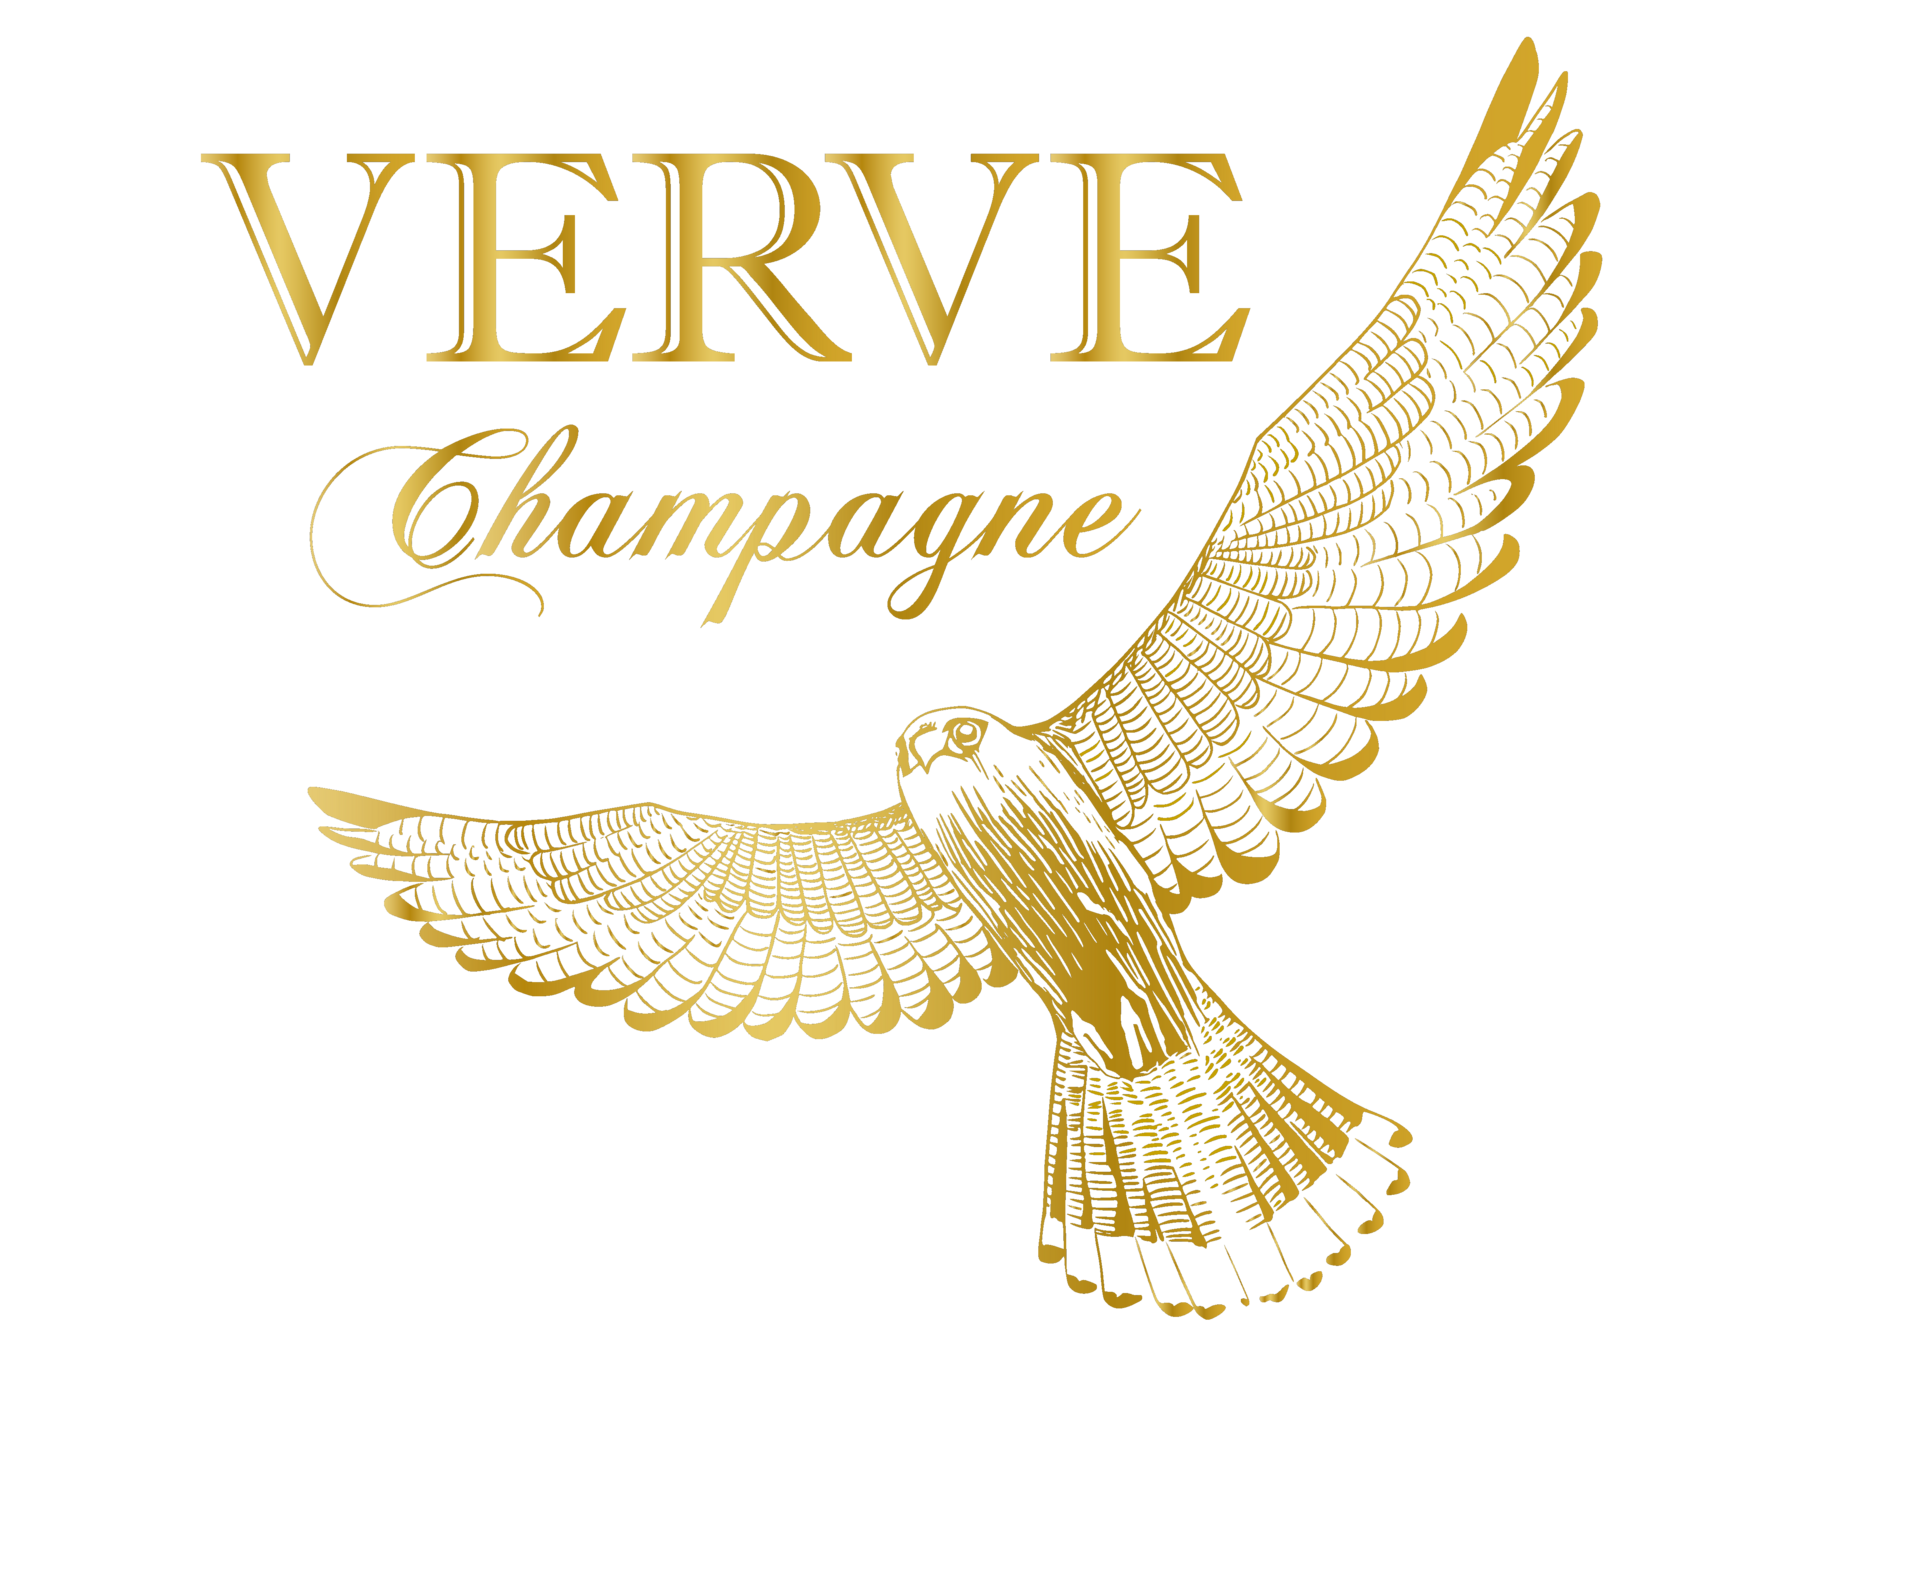 Verve Champagne